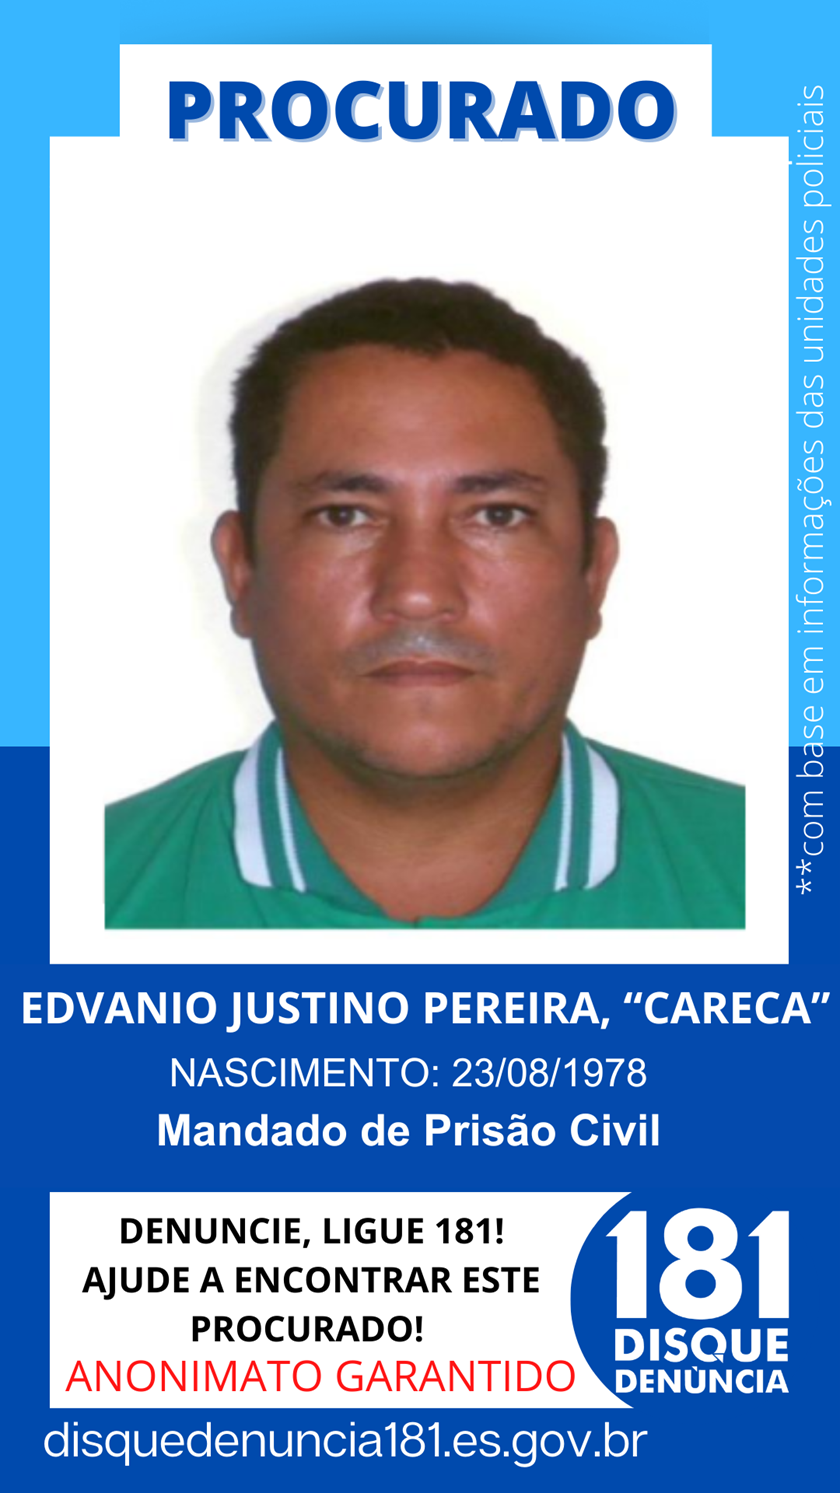 Logomarca - EDIVANIO JUSTINO PEREIRA